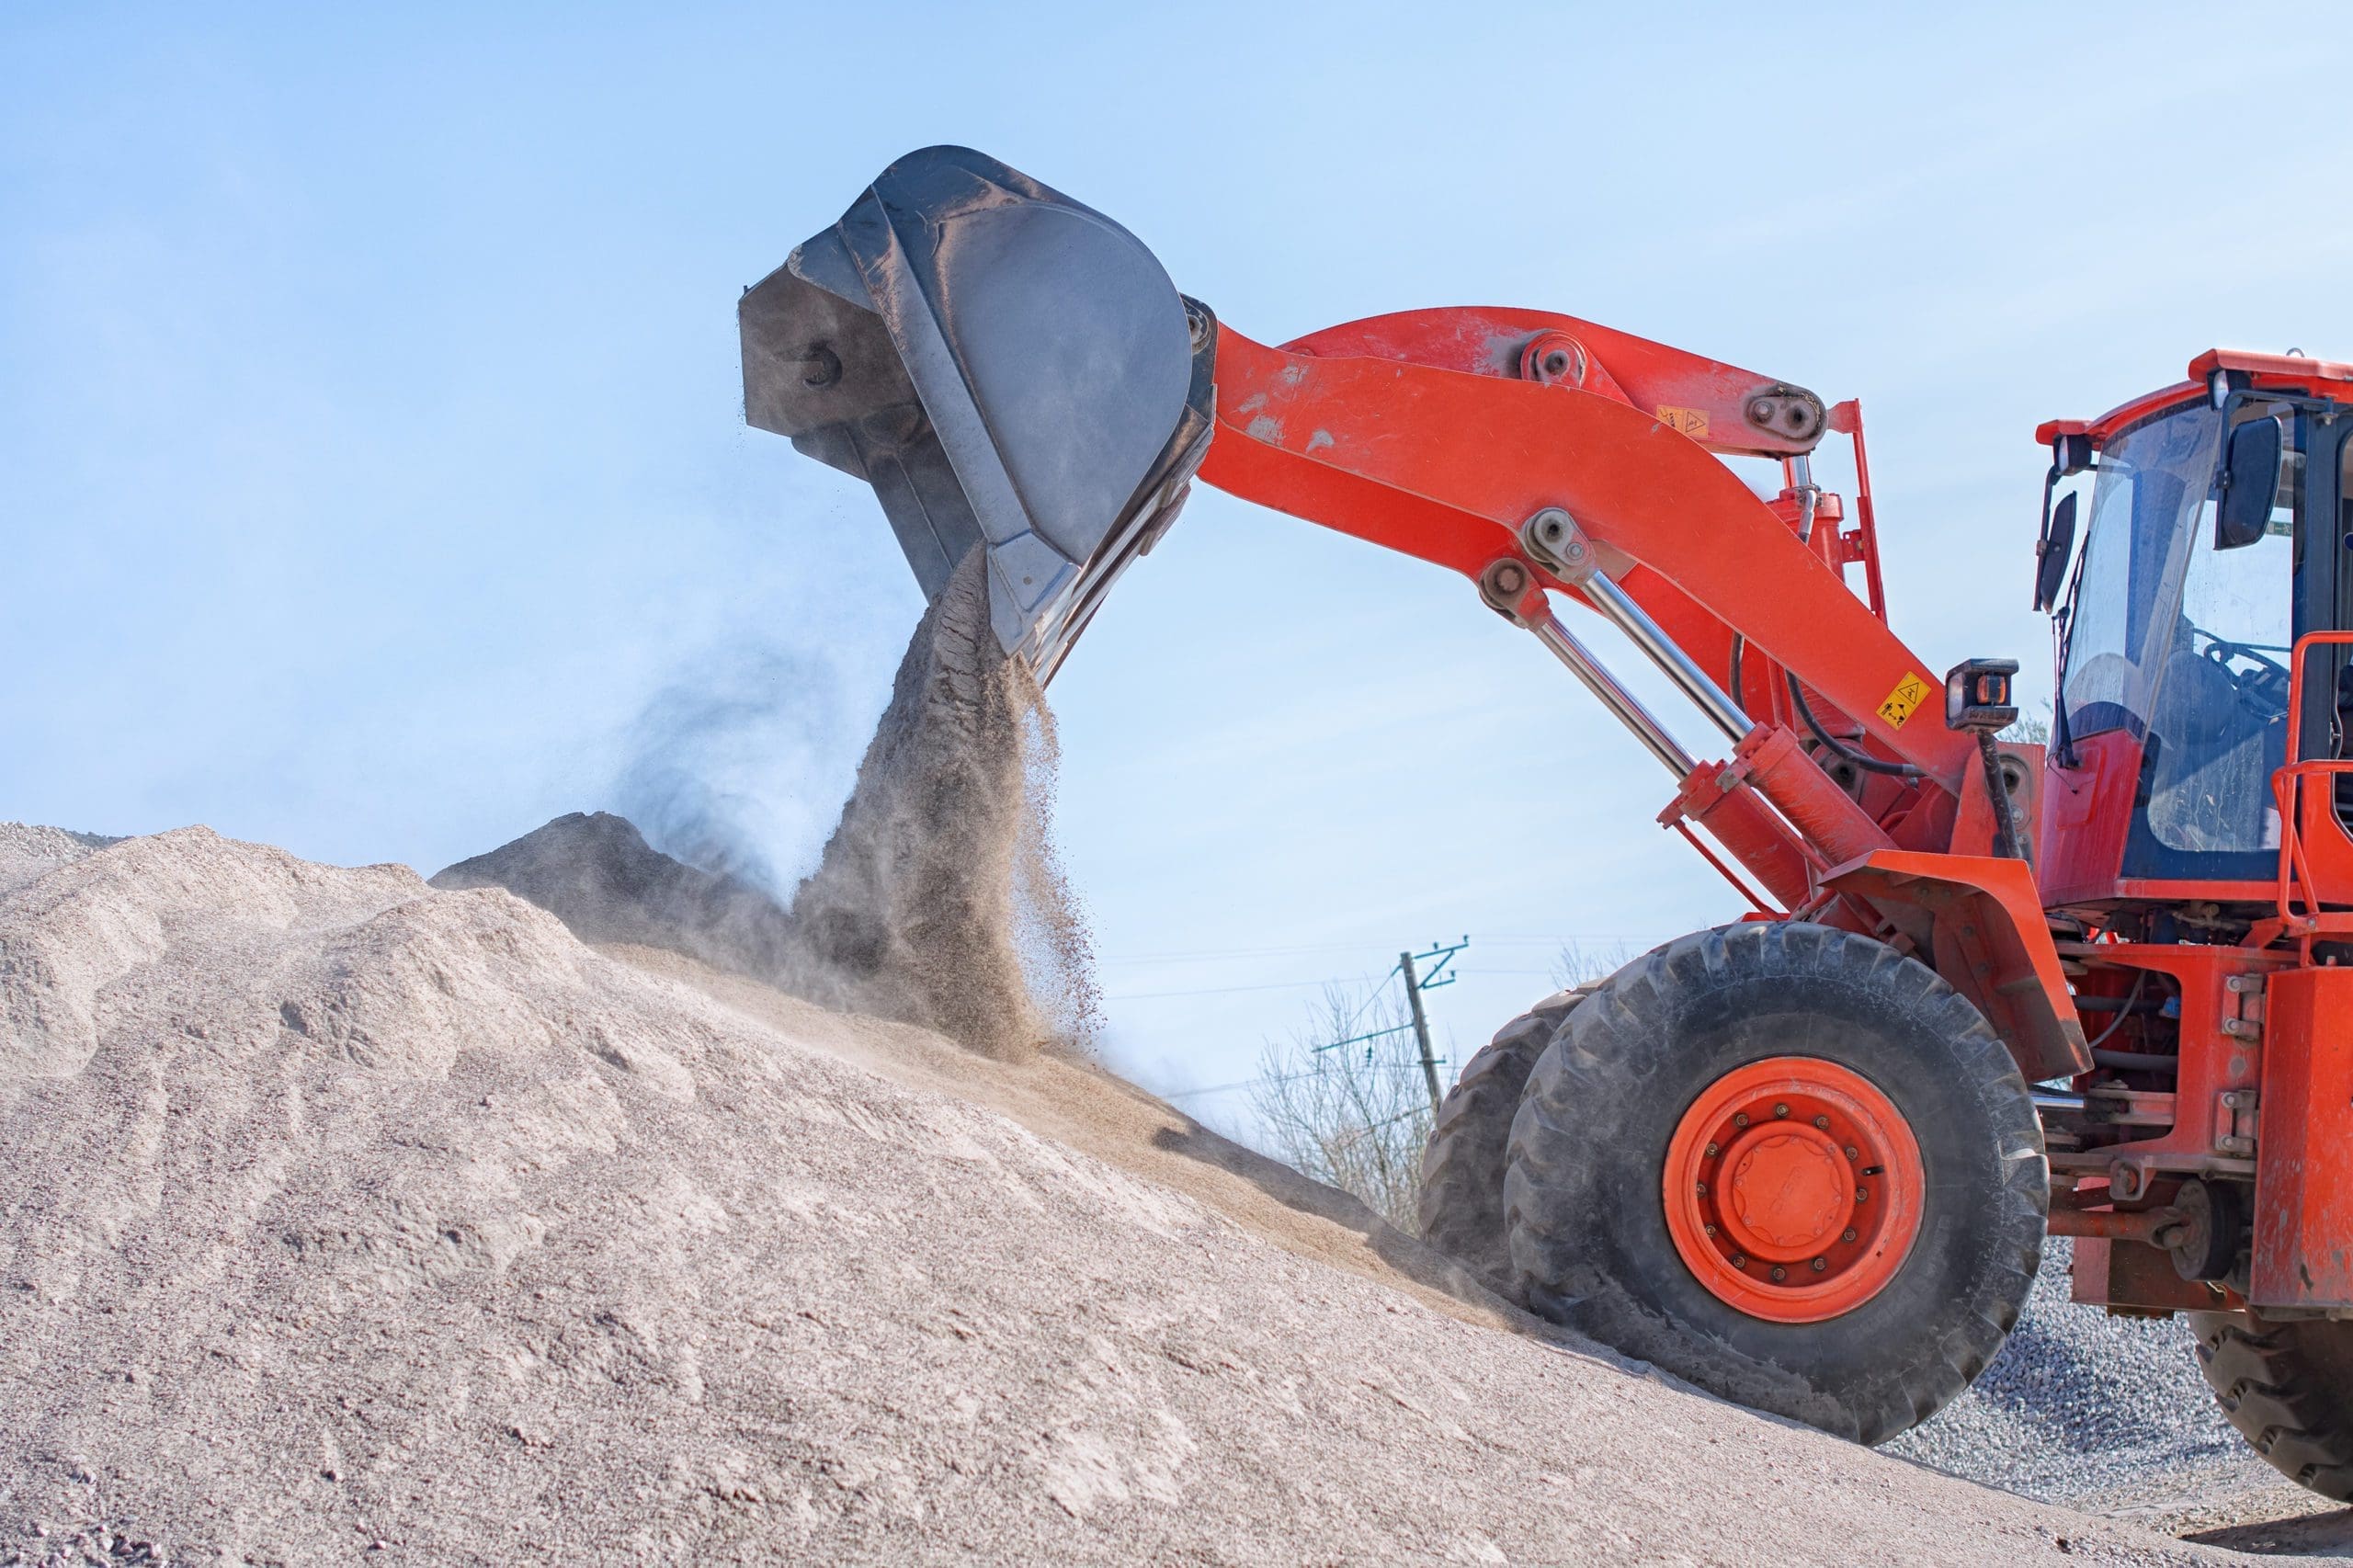 Heavy equipment digging dirt